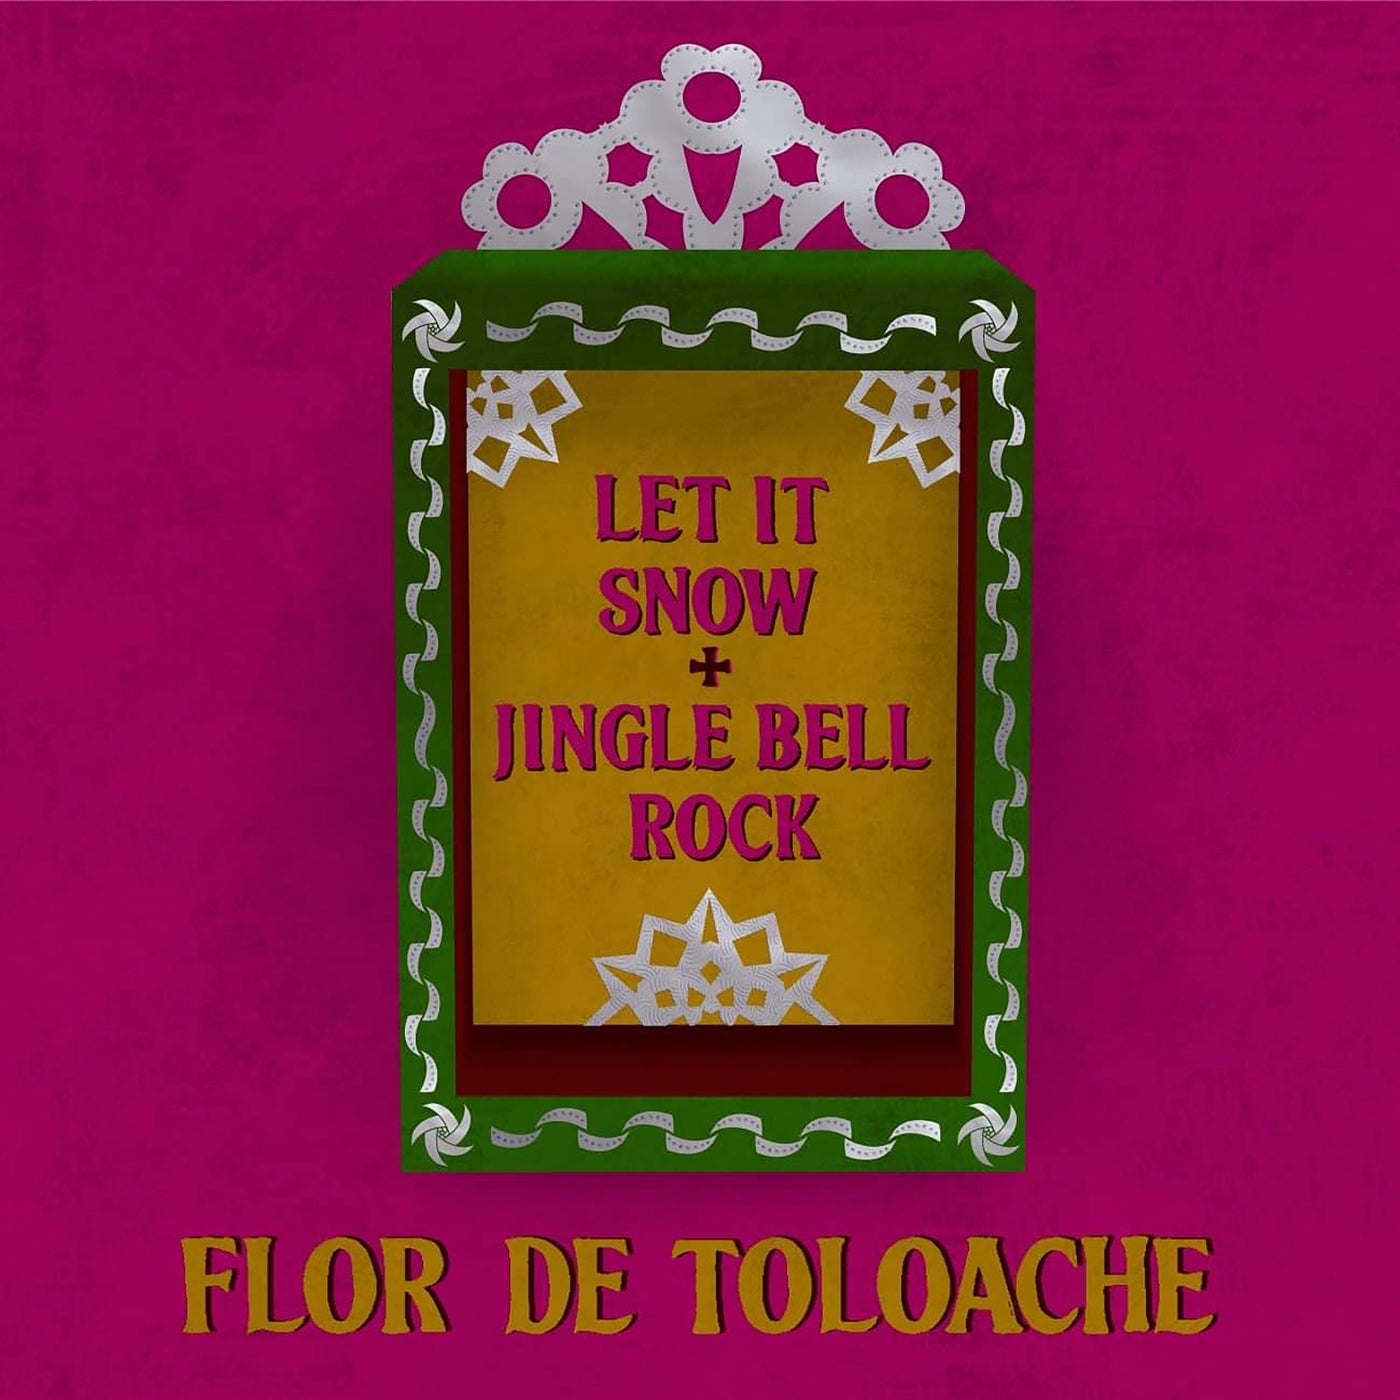 Let It Snow + Jingle Bell Rock by Flor de Toloache on Beatsource